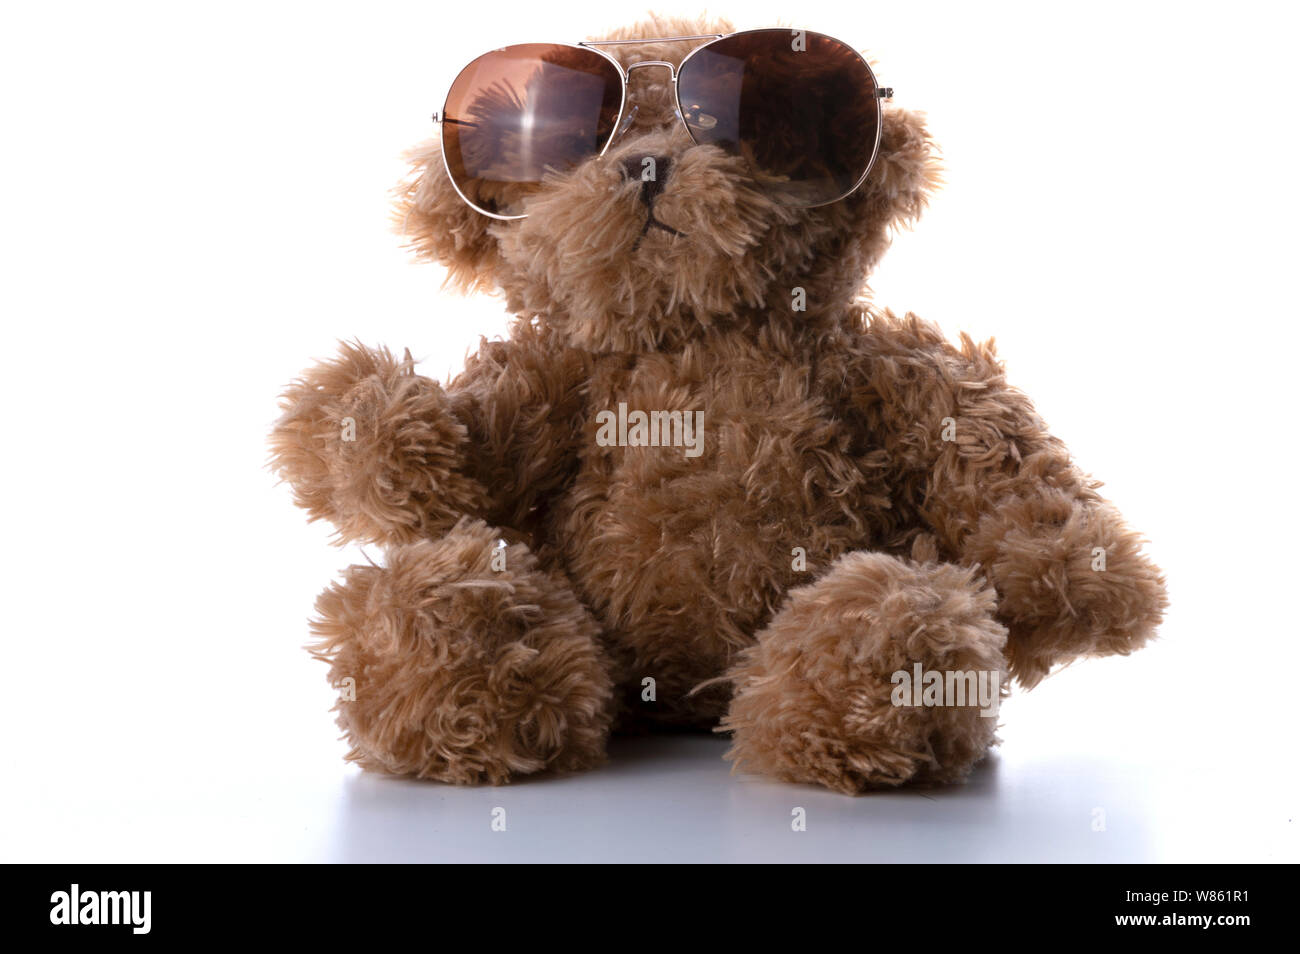 Oso de peluche con gafas de sol fotografías e imágenes de alta resolución -  Alamy